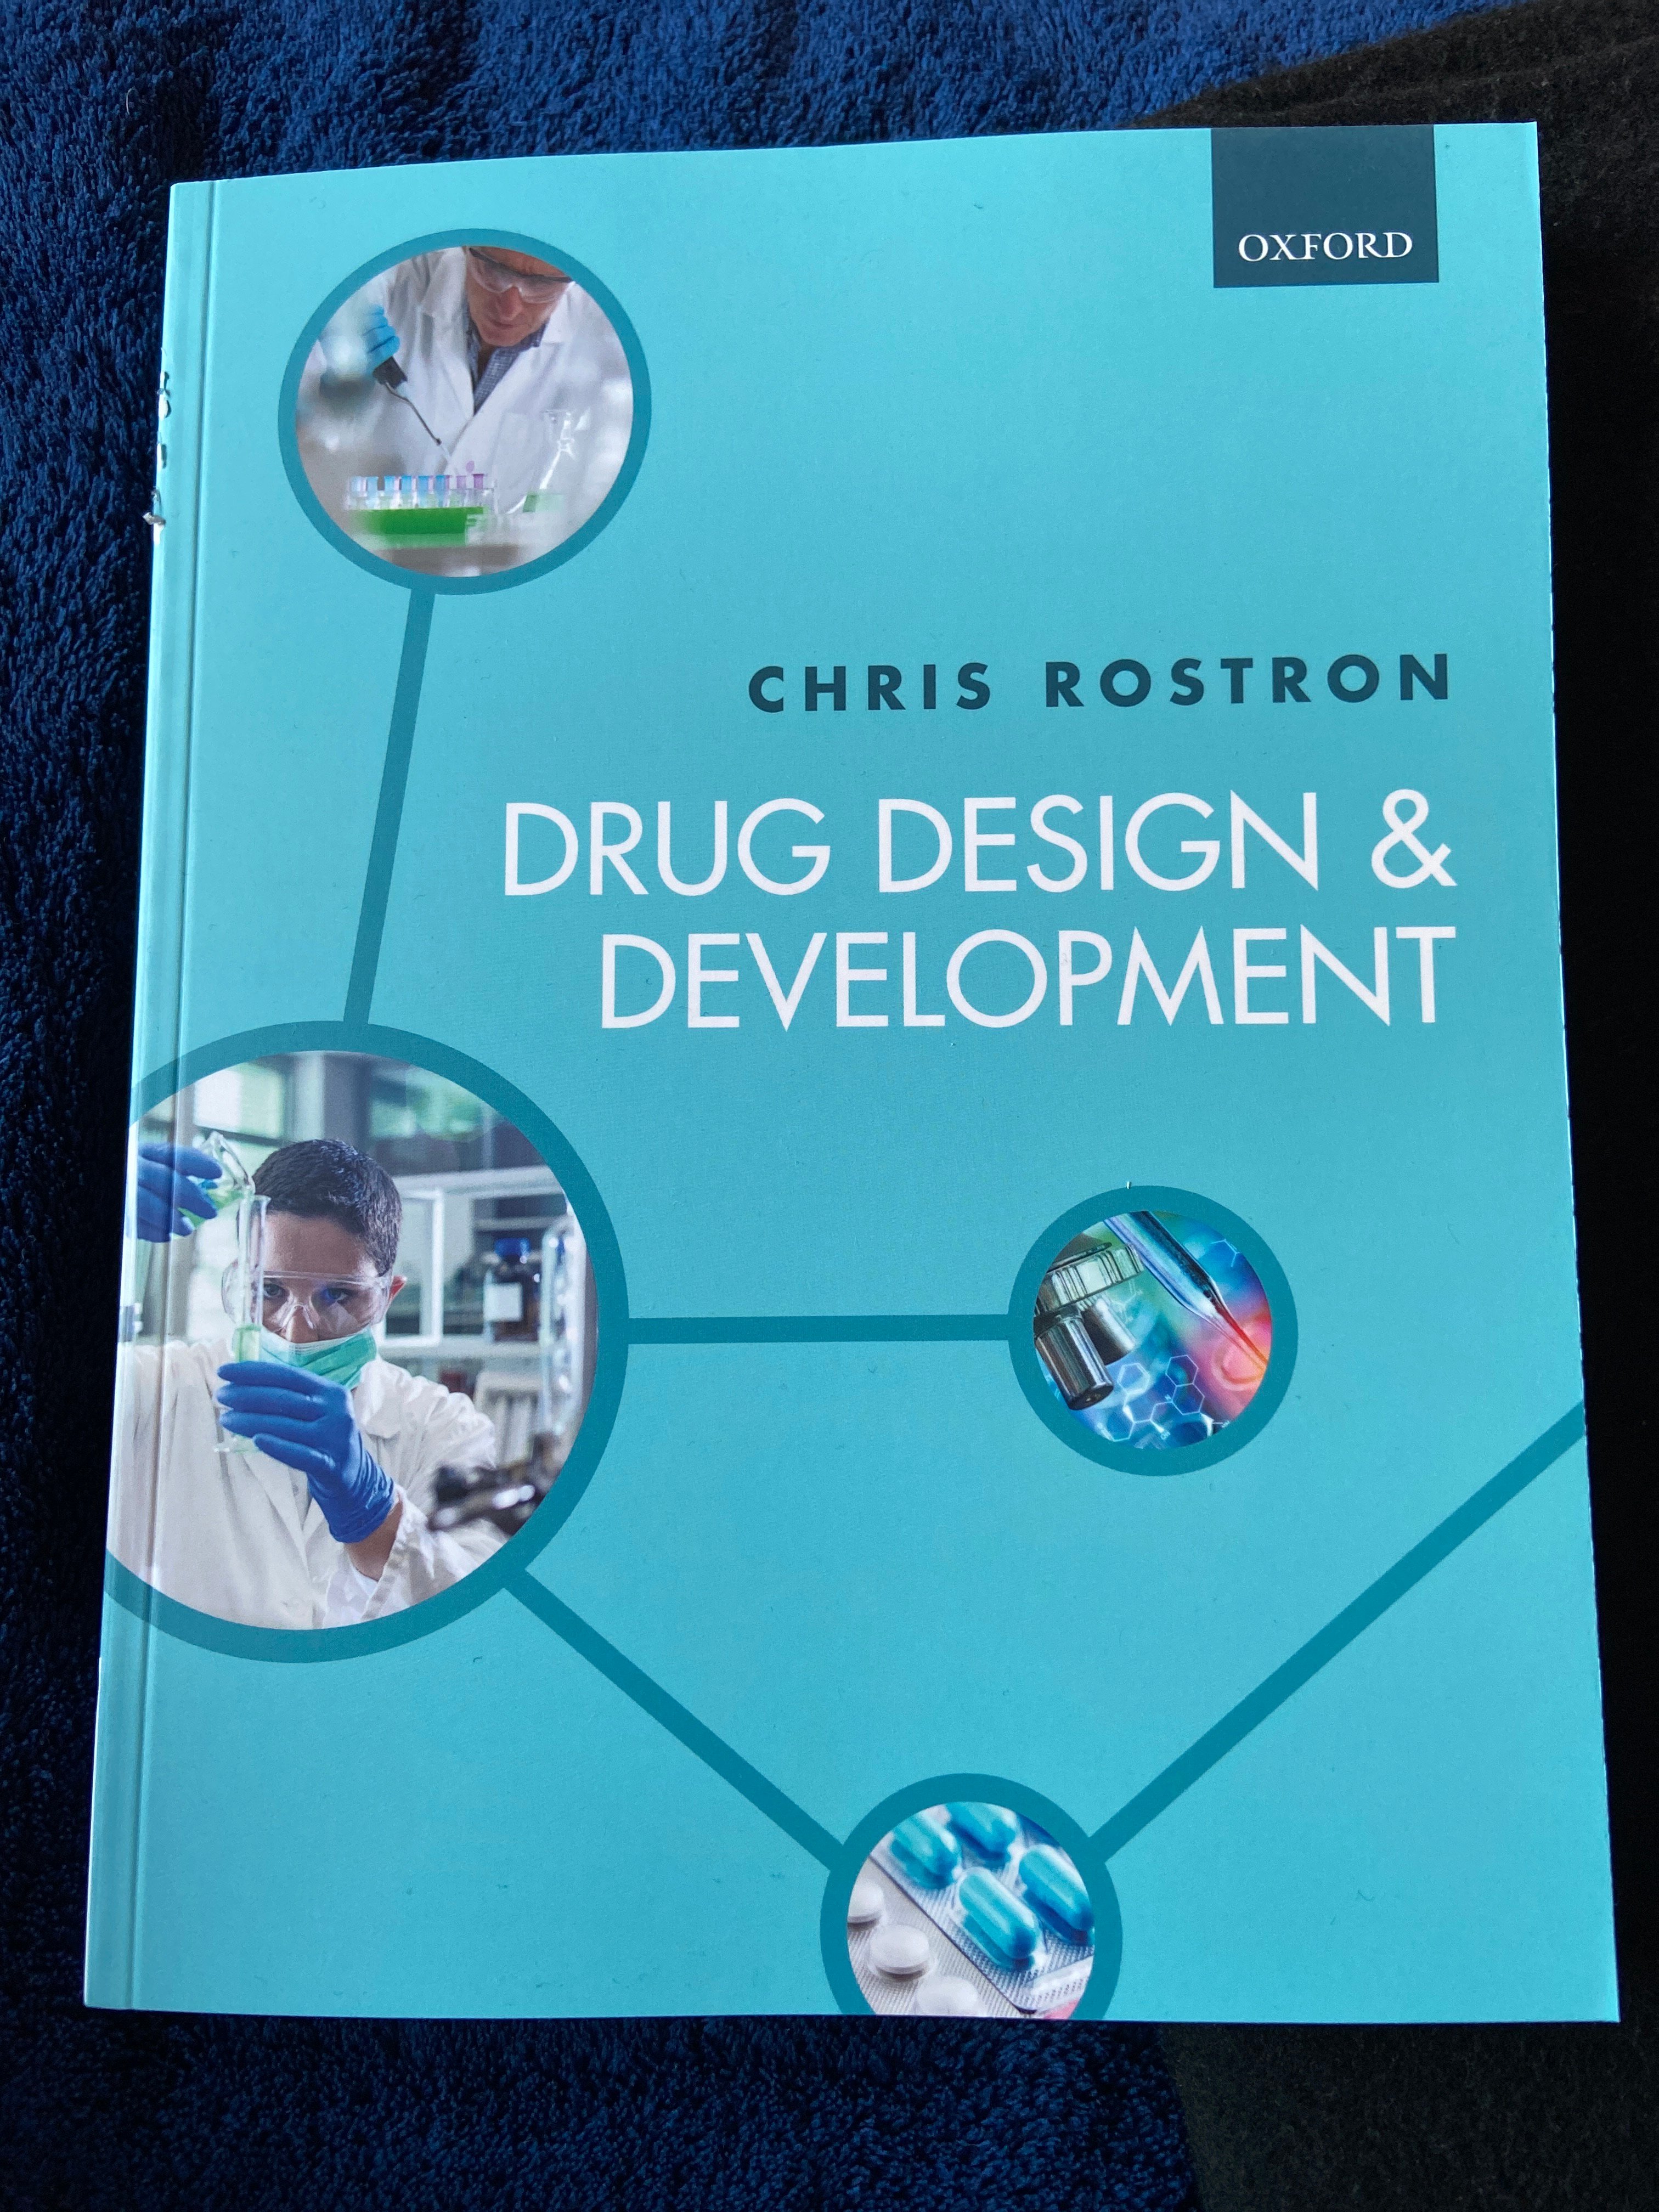 Drug design & development - Chris Rostron